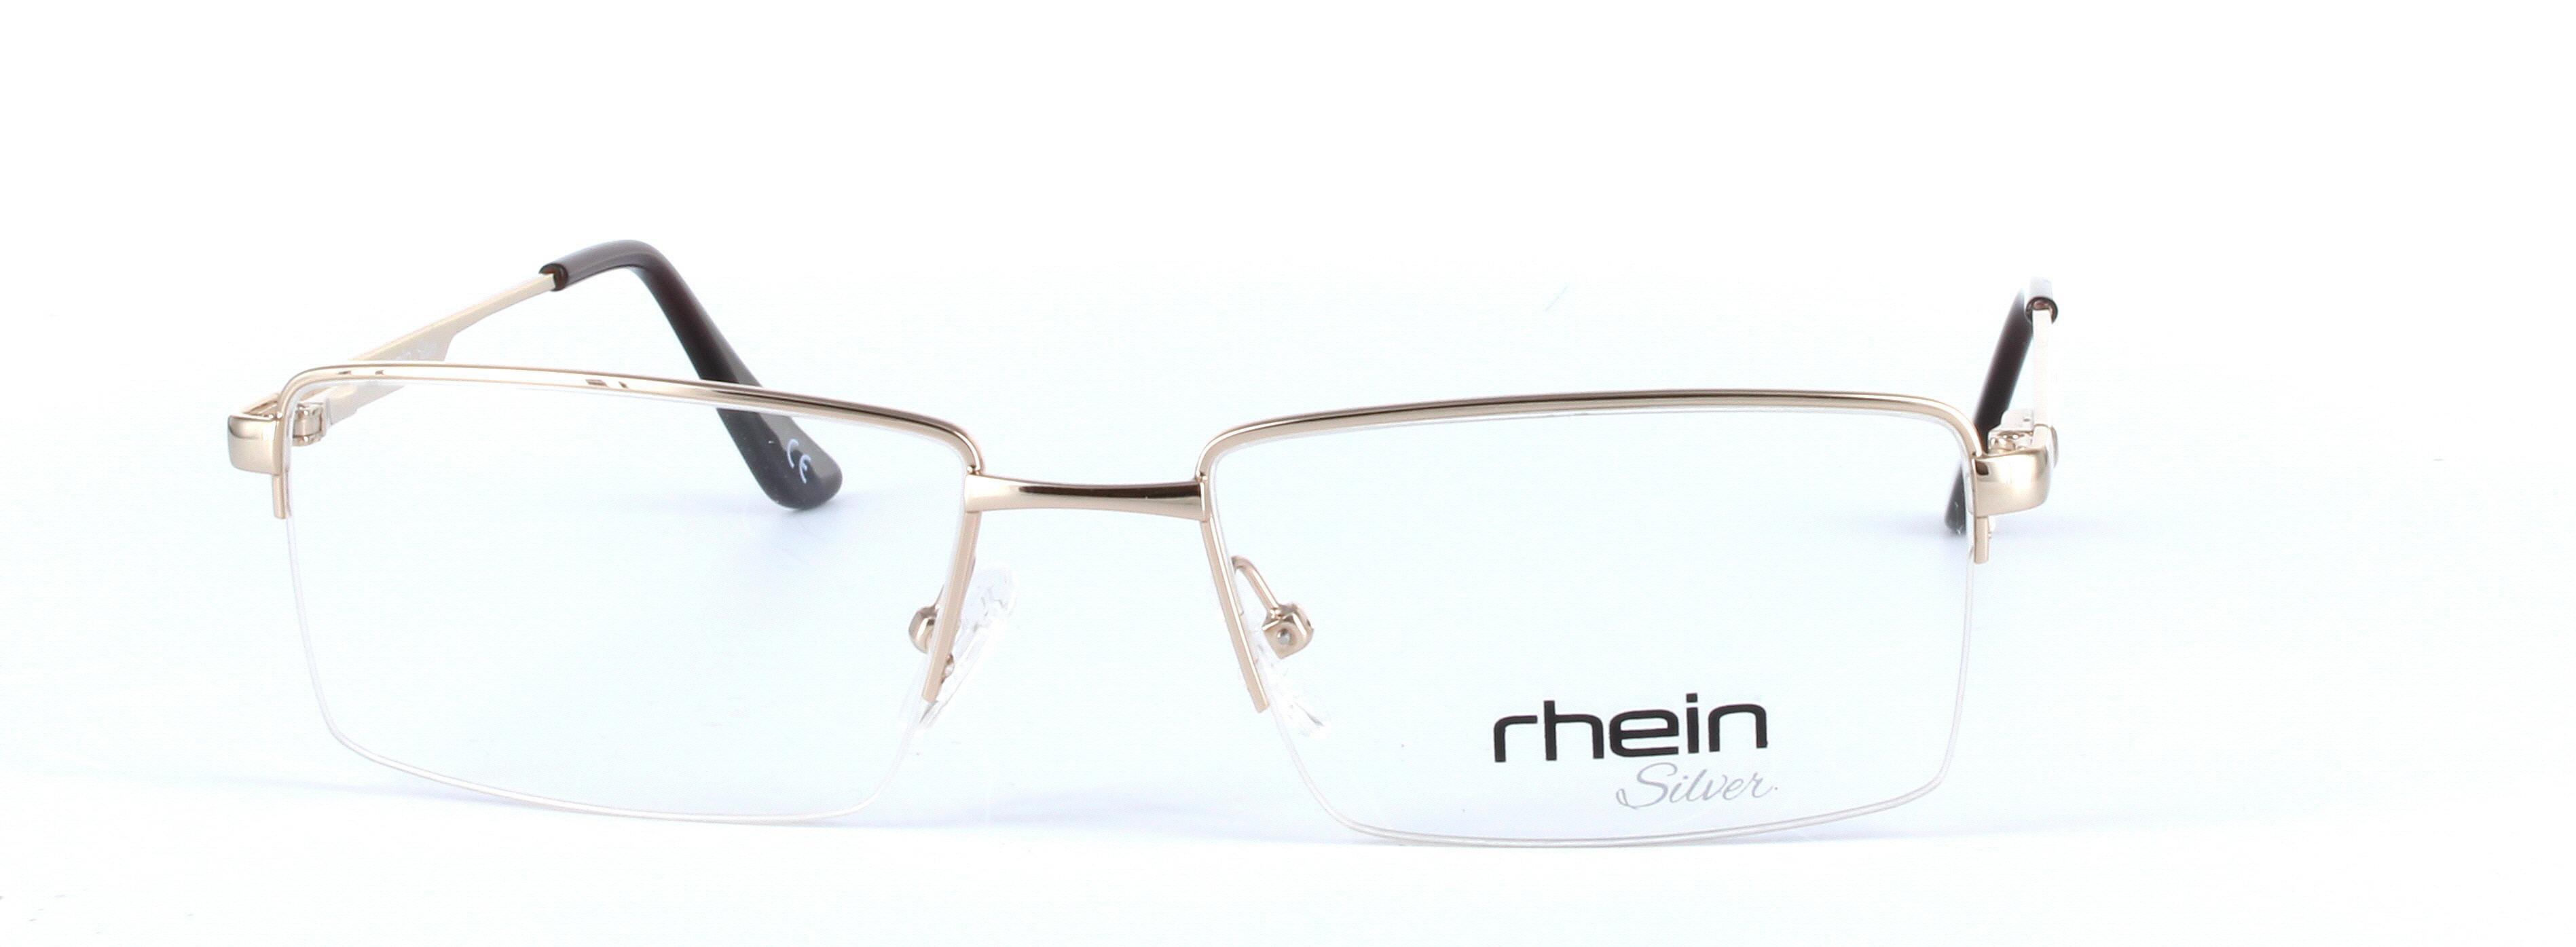 Highfield Gold Semi Rimless Rectangular Metal Glasses - Image View 5